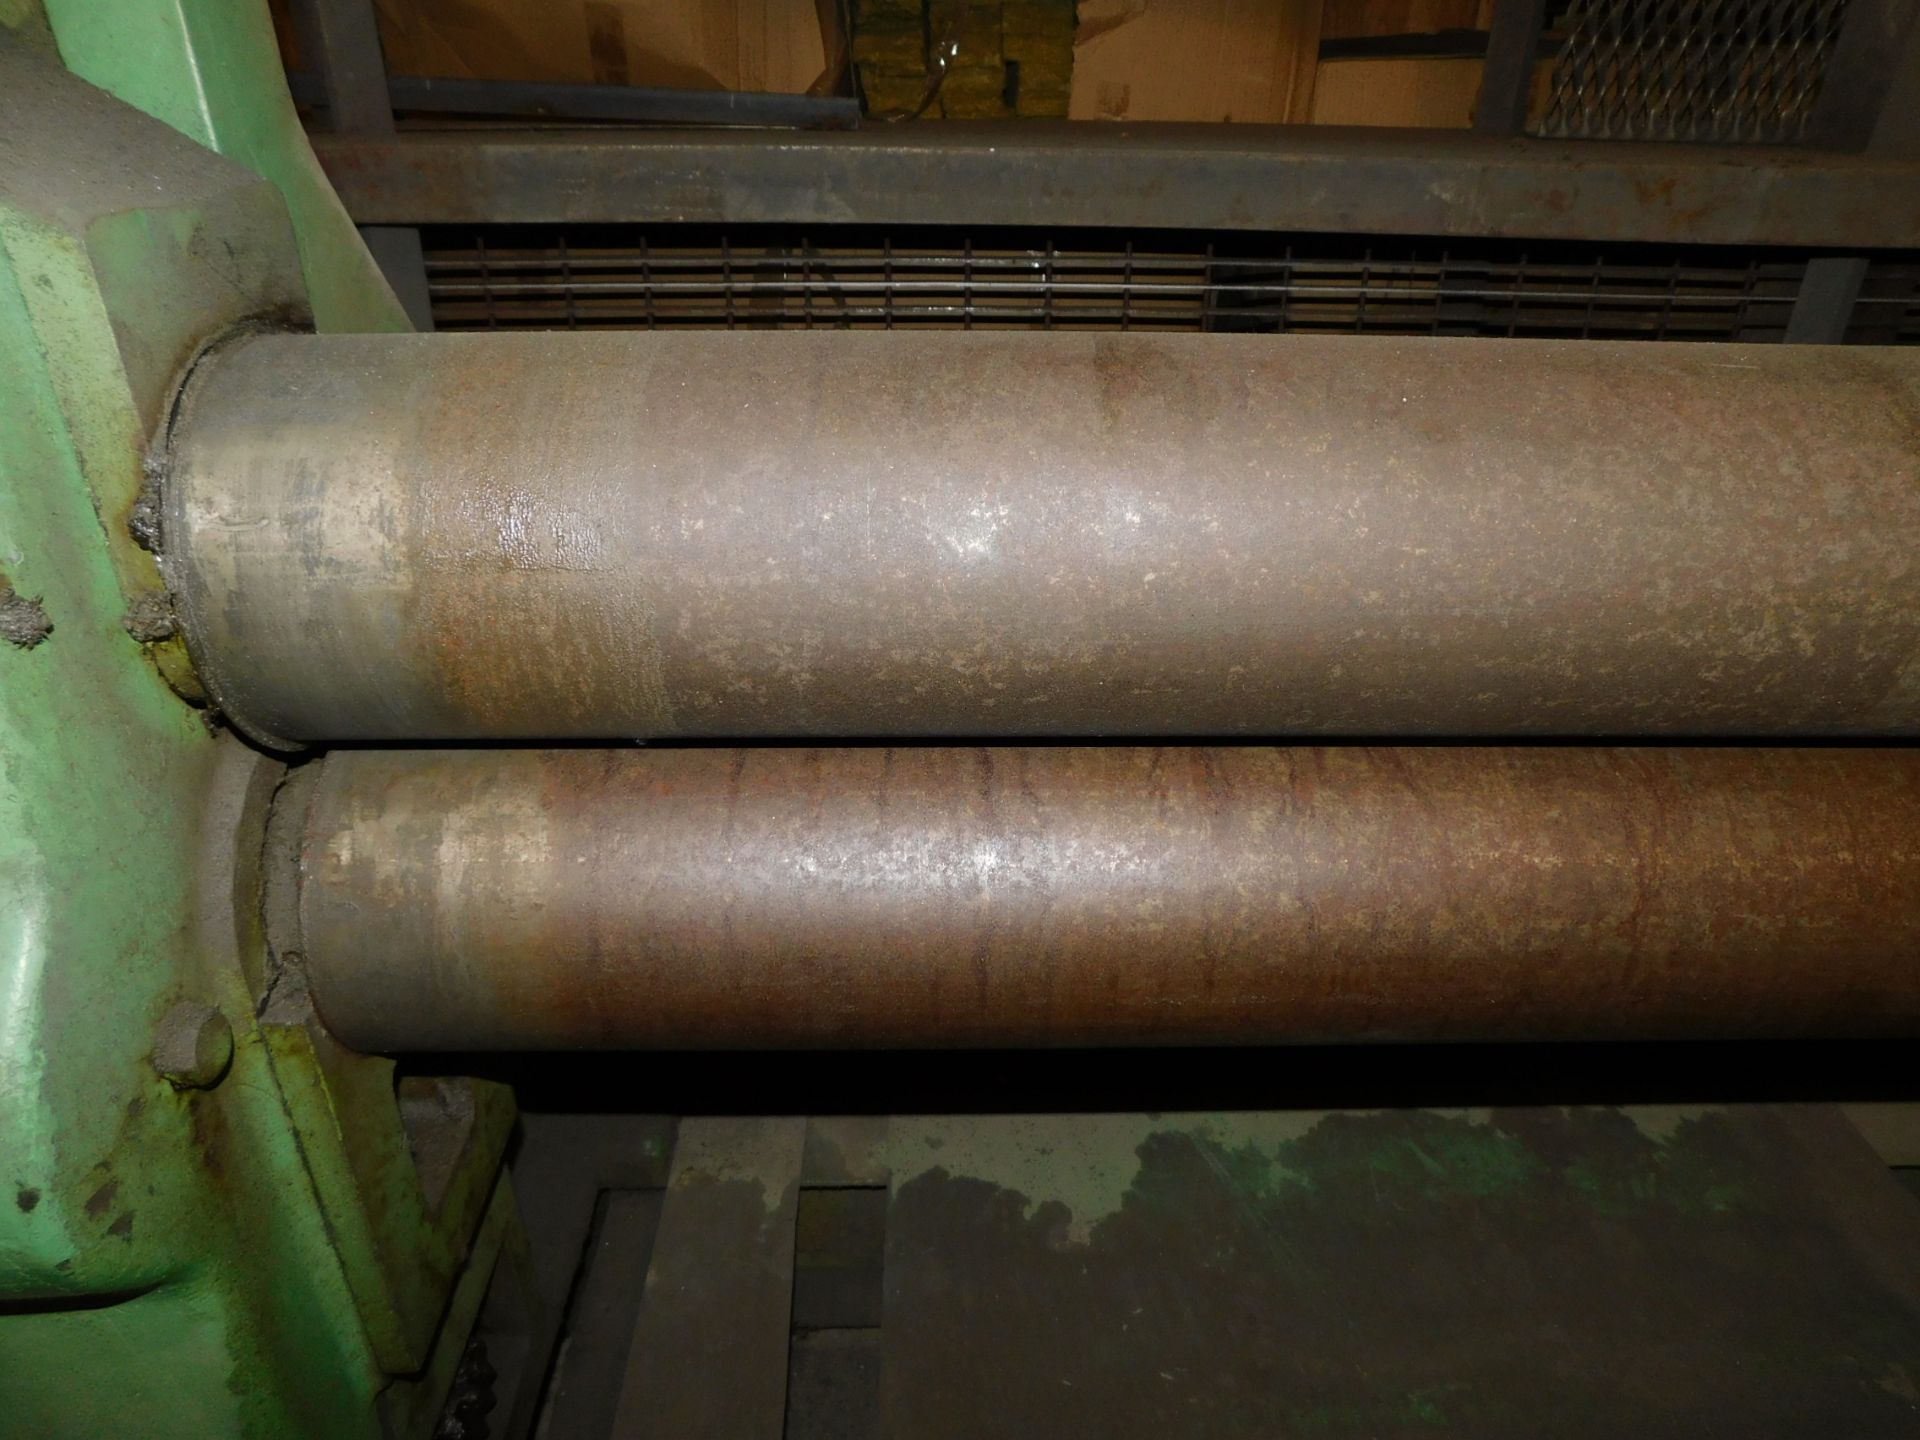 Pexto Model 1478 Initial Pinch Power Bending Rolls, SN 9/36, 8' x 1/8" Mild Steel Cap., Power Roll - Image 3 of 5